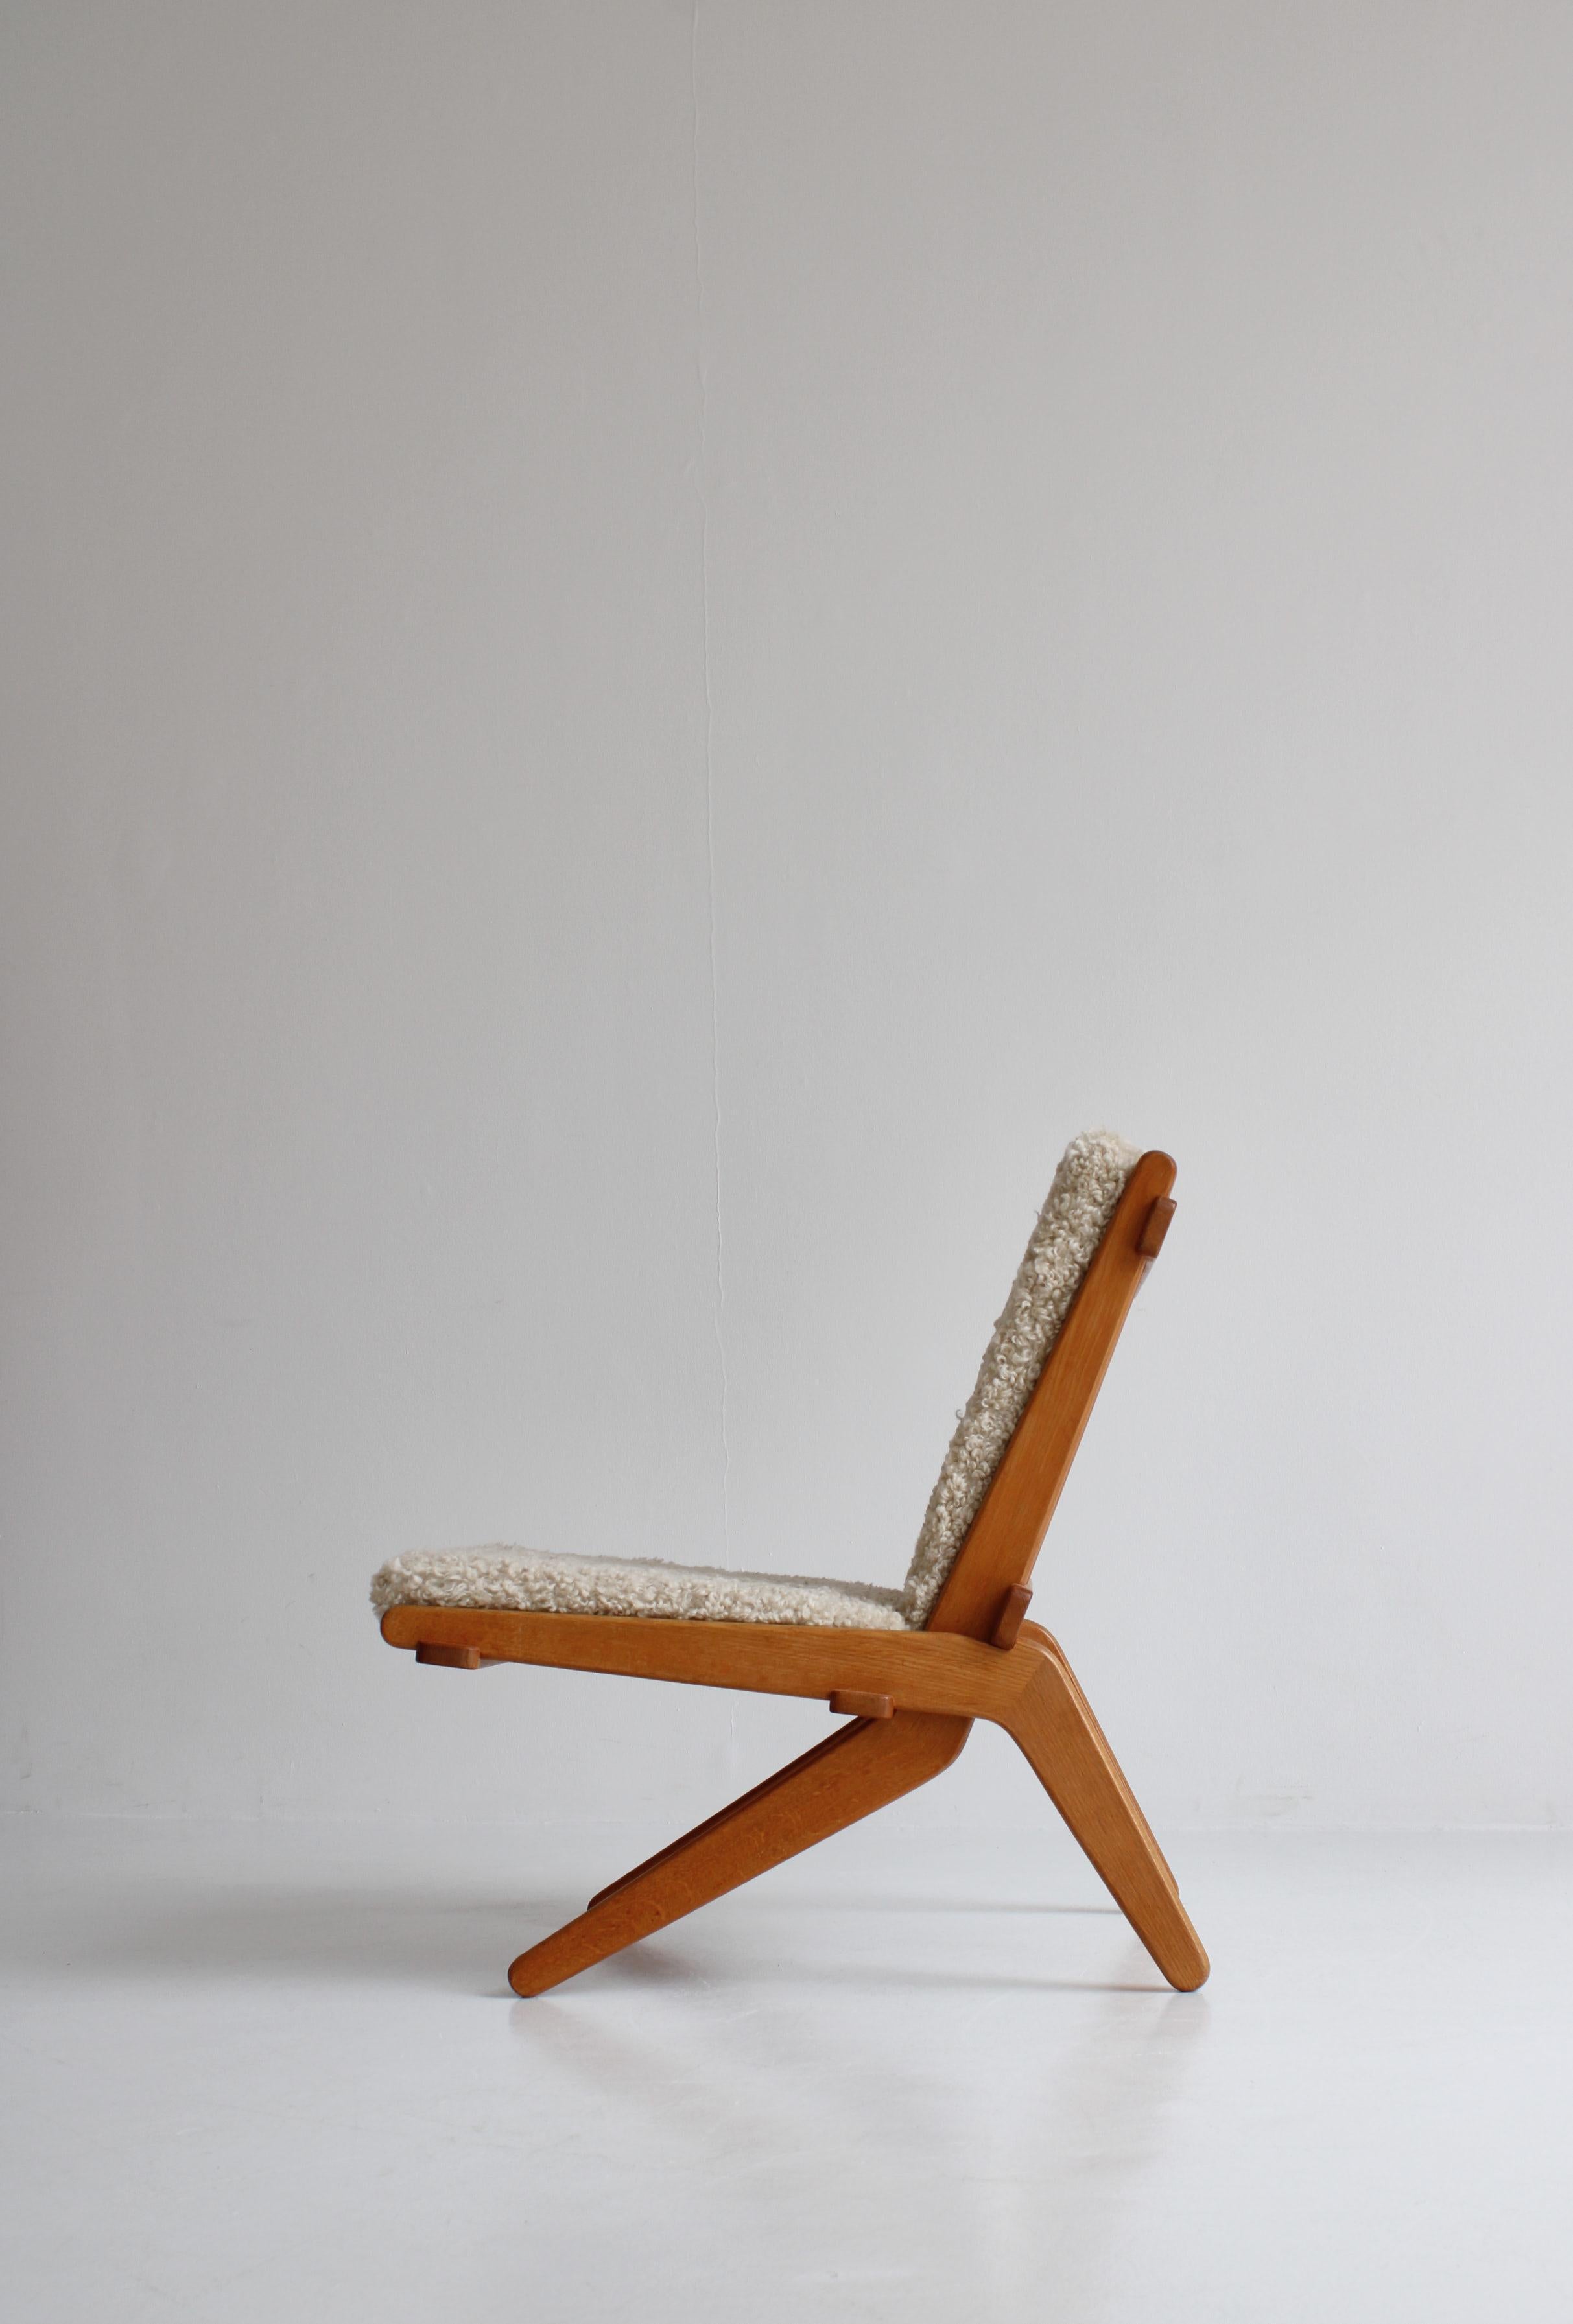 Danish Modern Folding Chair in Oak and Natural Sheepskin, Preben Thorsen, 1950s For Sale 1